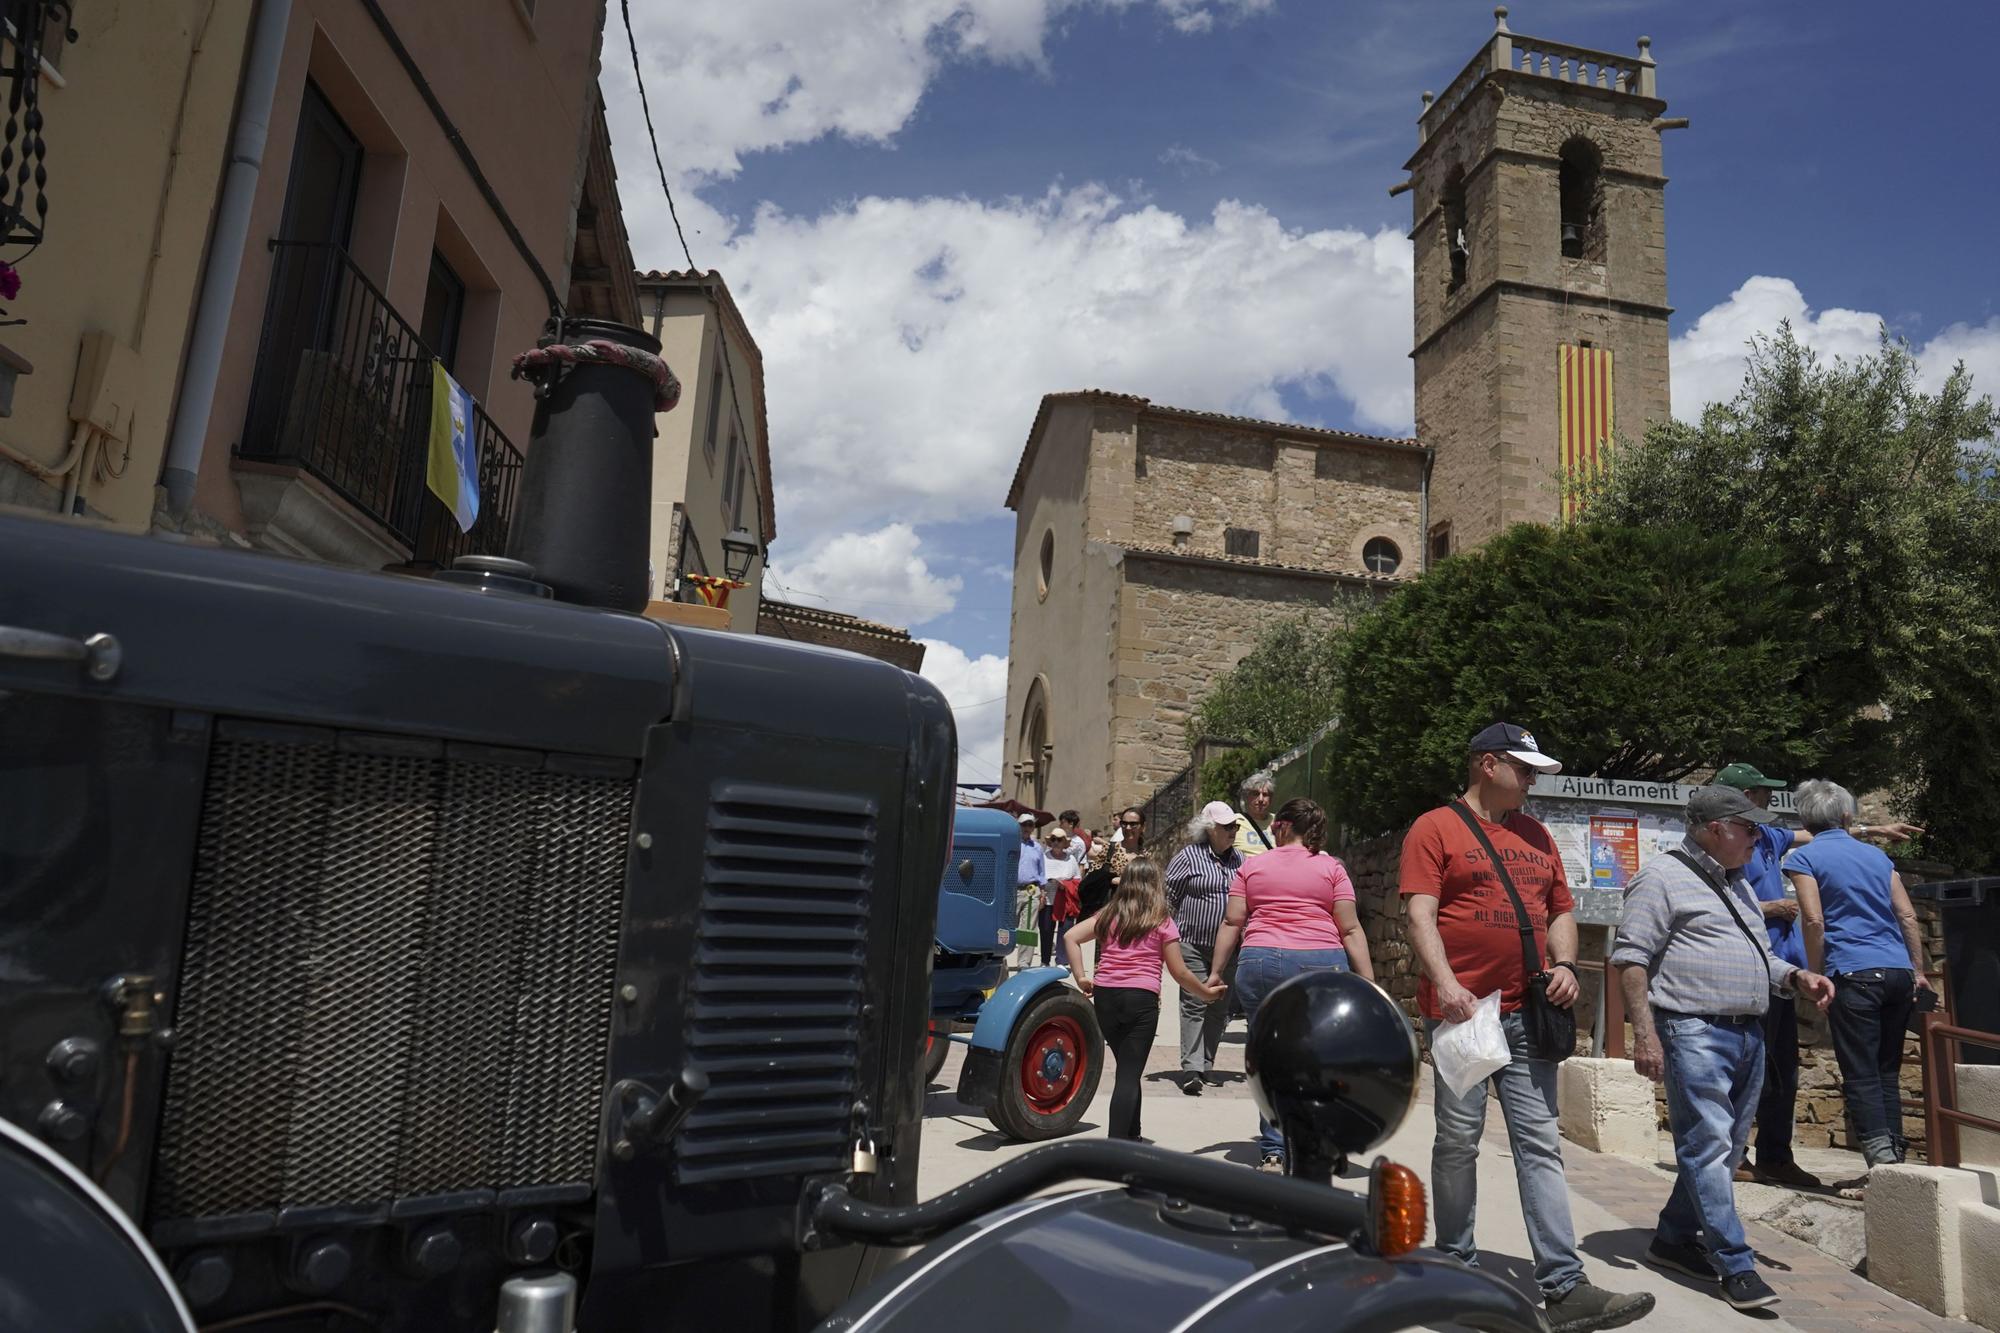 Festa del panellet de Castellgalí, en imatges 